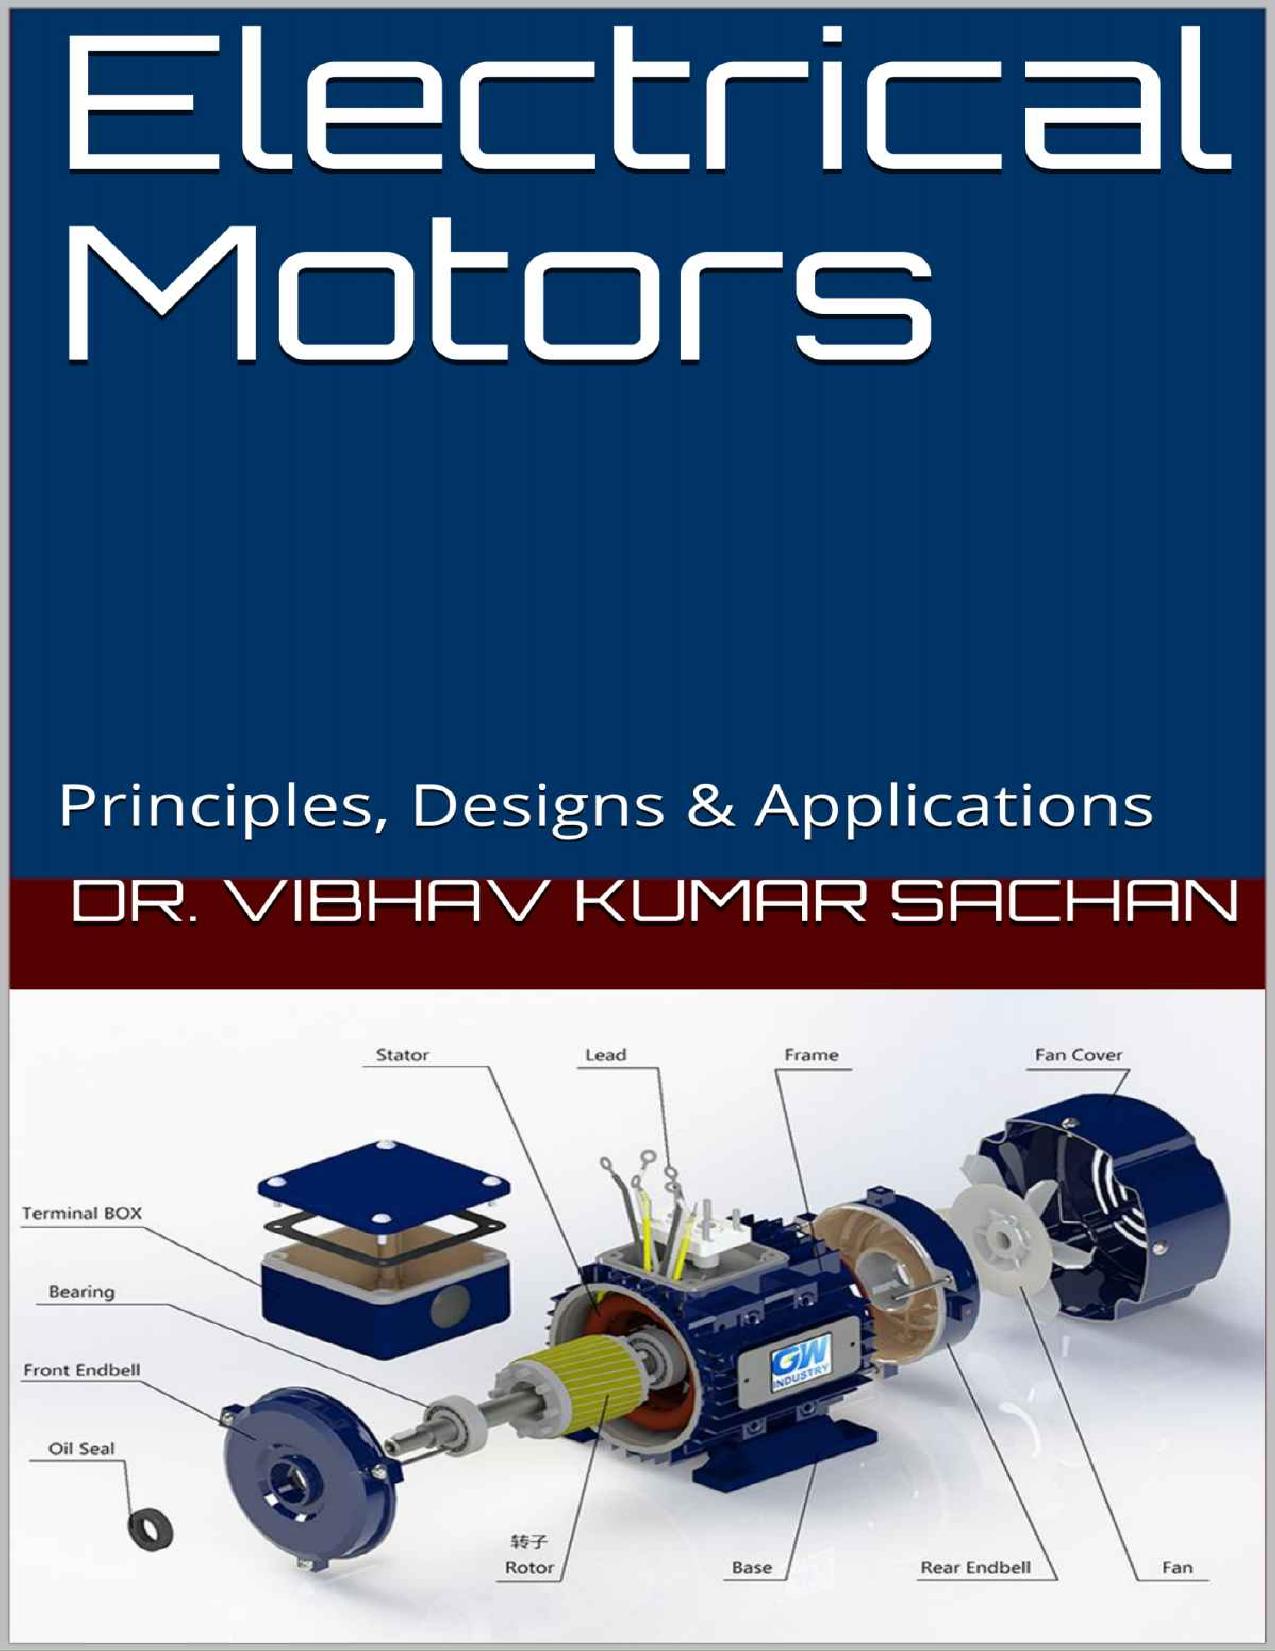 Electrical Motors : Principles, Designs & Applications (Sachan Book 27) by Dr. Vibhav Kumar Sachan